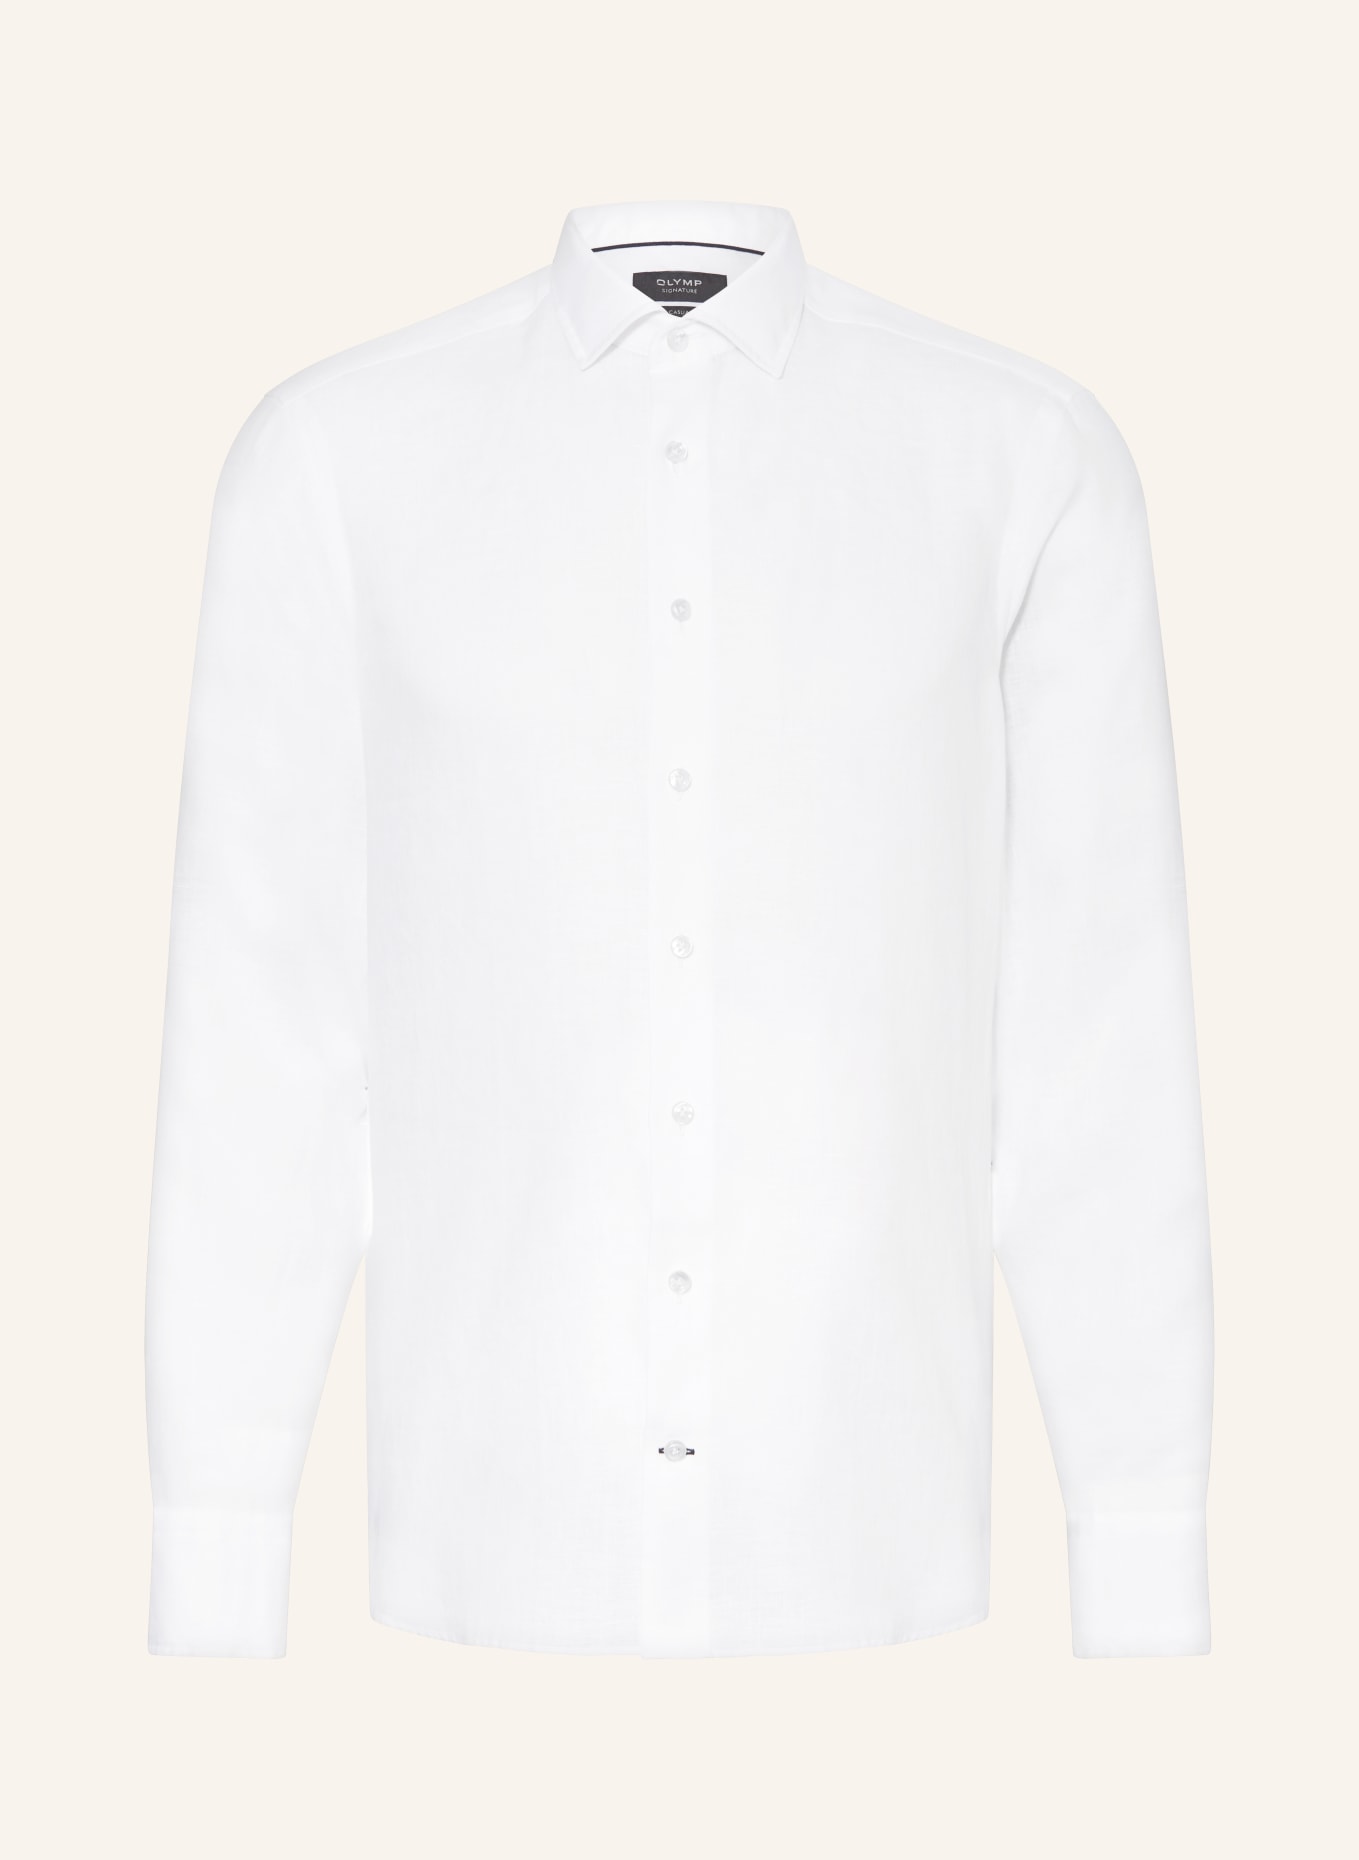 OLYMP SIGNATURE Leinenhemd Tailored Fit, Farbe: WEISS (Bild 1)